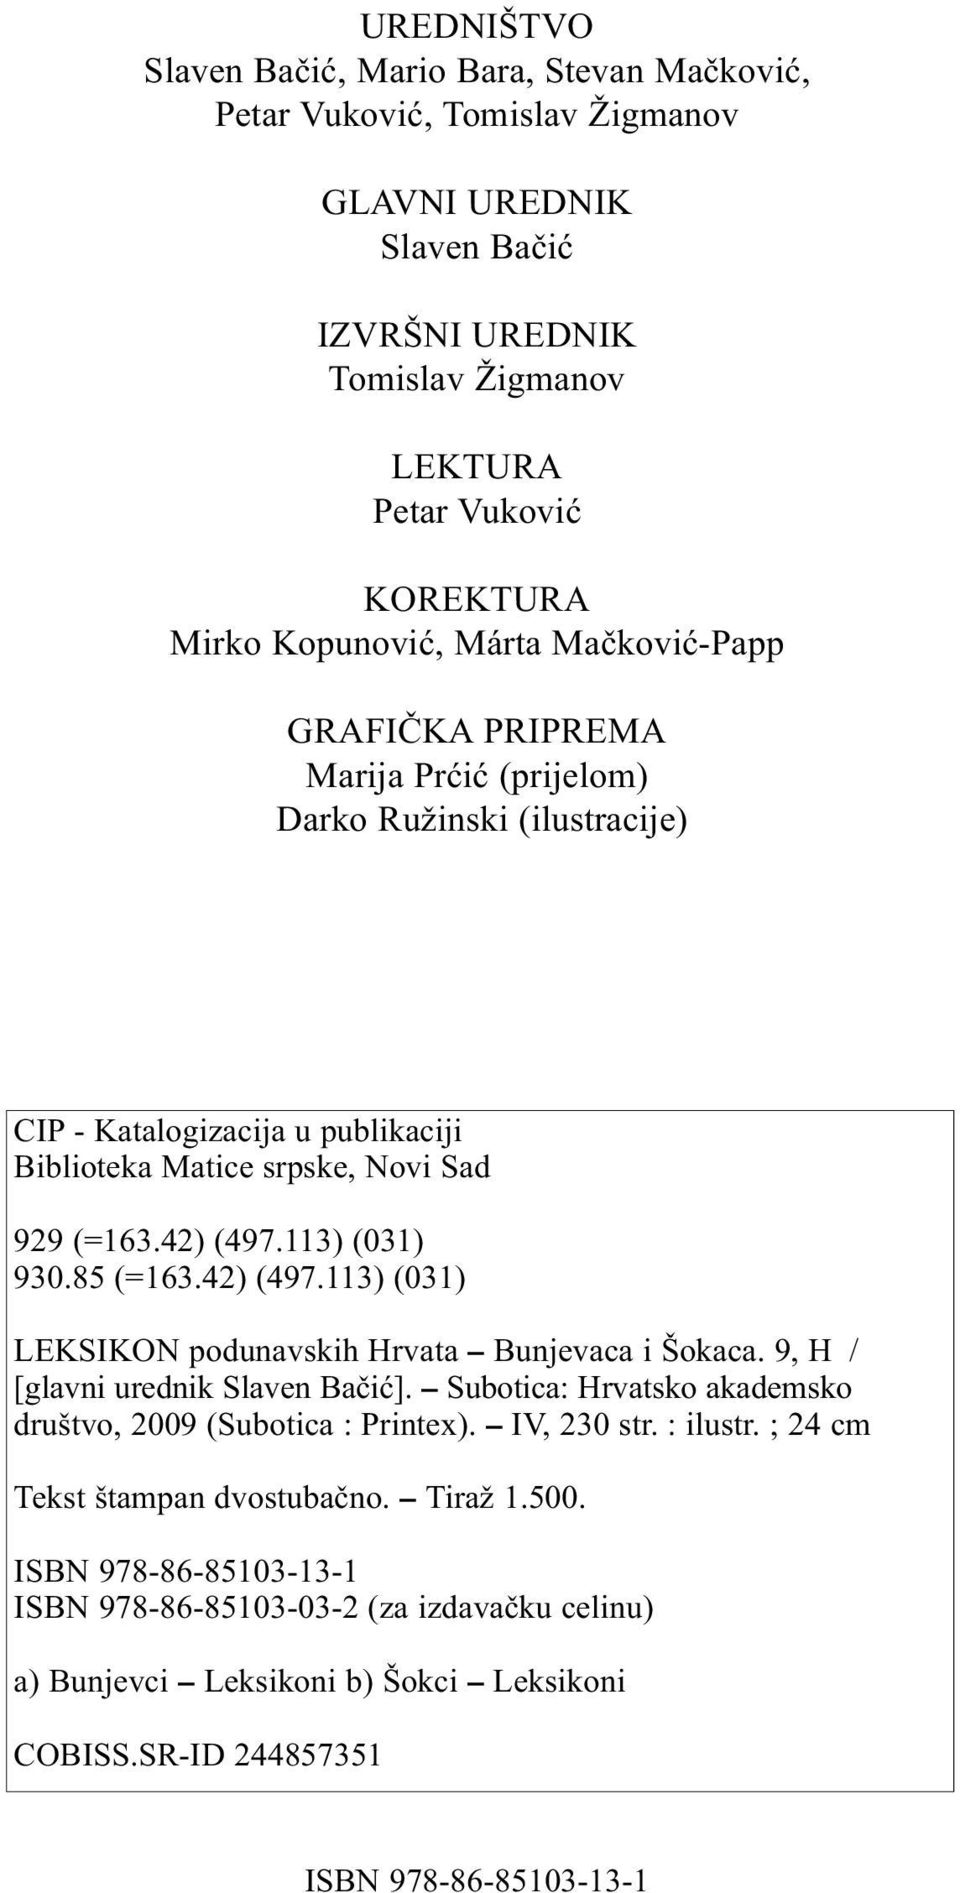 85 (=163.42) (497.113) (031) LEKSIKON podunavskih Hrvata Bunjevaca i Šokaca. 9, H / [glavni urednik Slaven Bačić]. Subotica: Hrvatsko akademsko društvo, 2009 (Subotica : Printex). IV, 230 str.